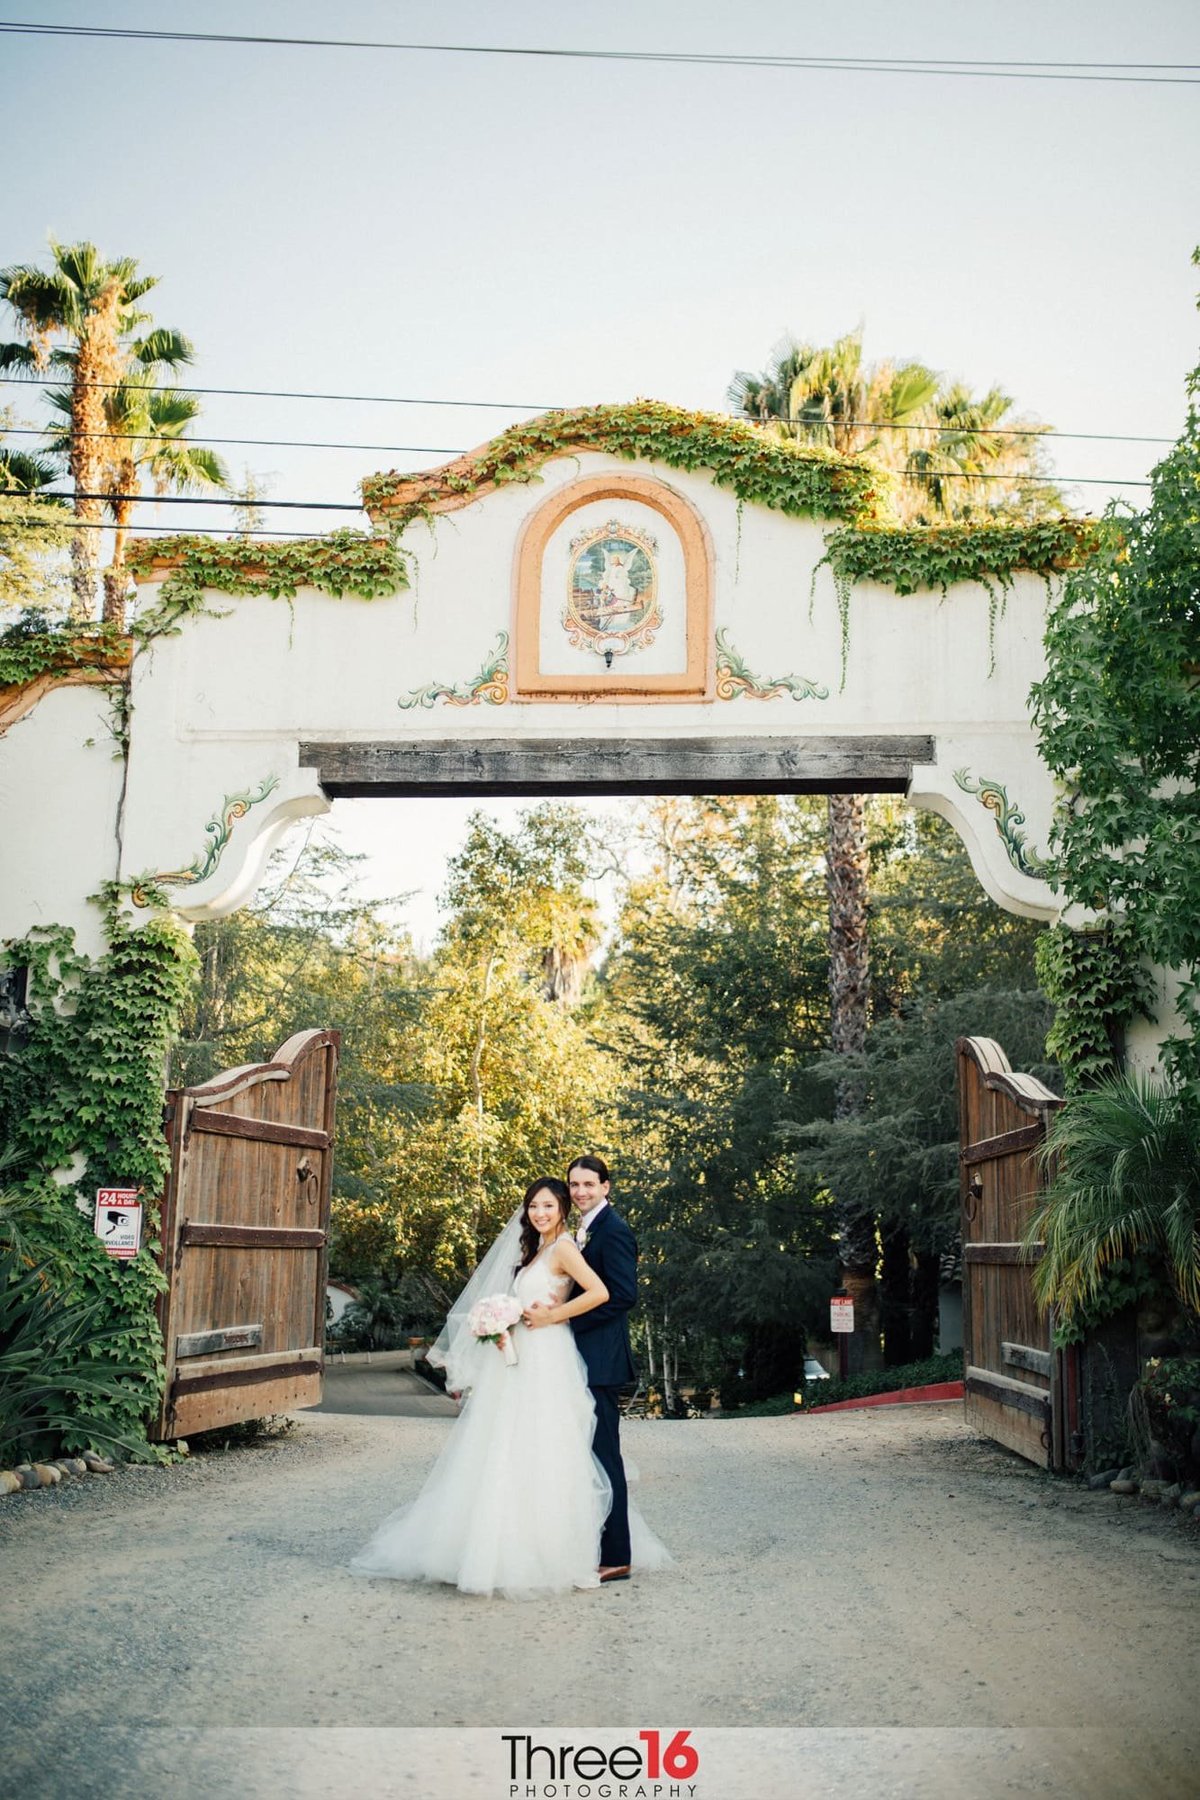 Bride and Groom pose at the Rancho Las Lomas entrance gate